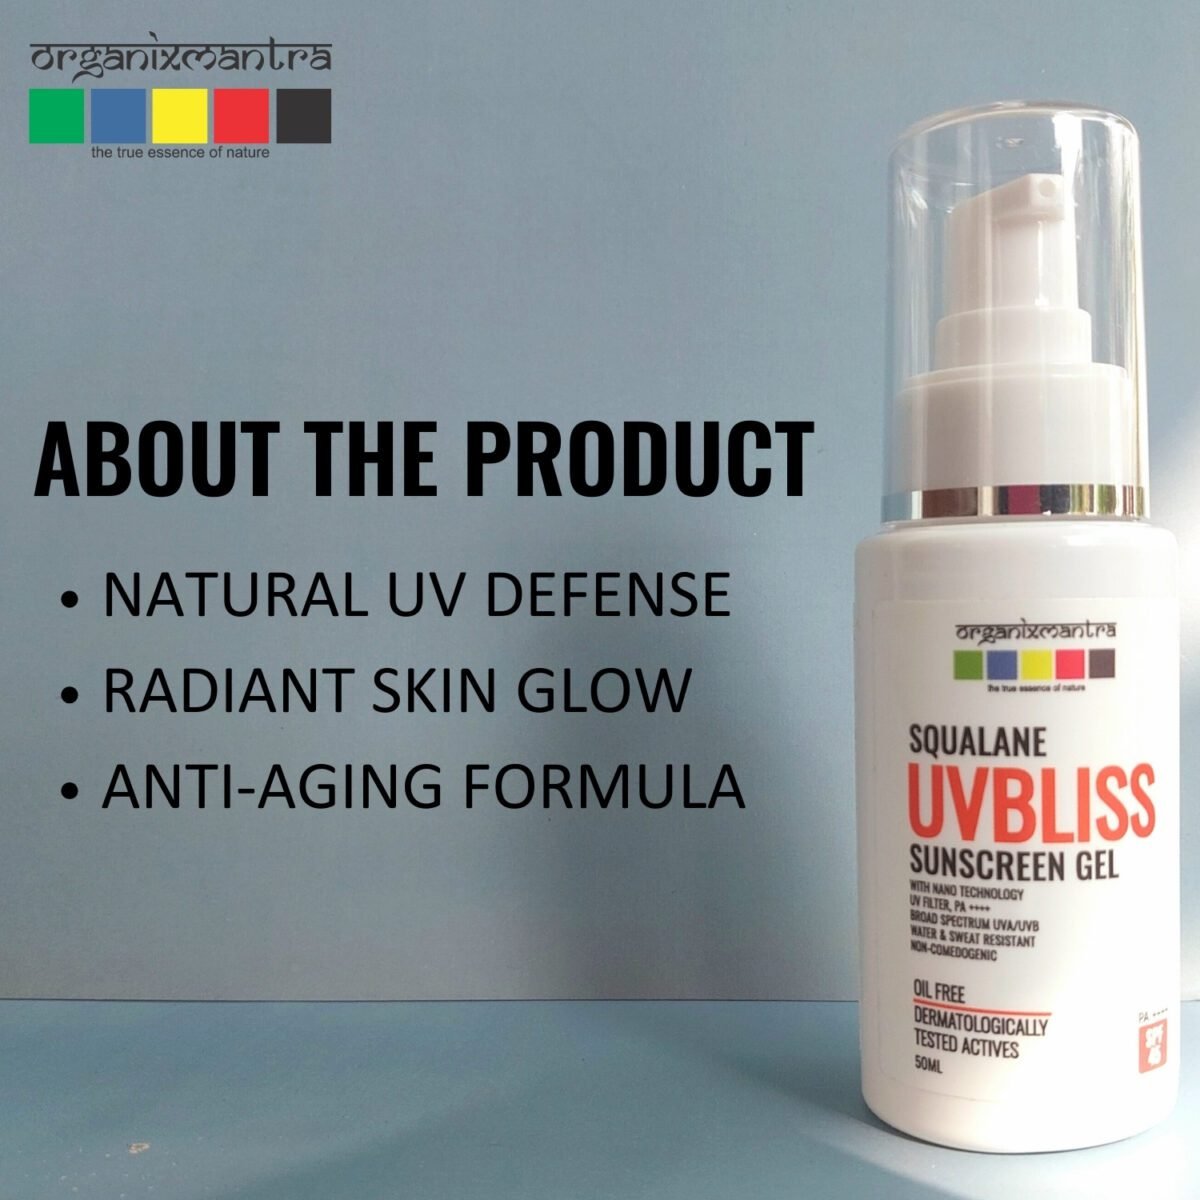 Squalane UV Bliss Sunscreen Gel 50 ml-1- Organix Mantra